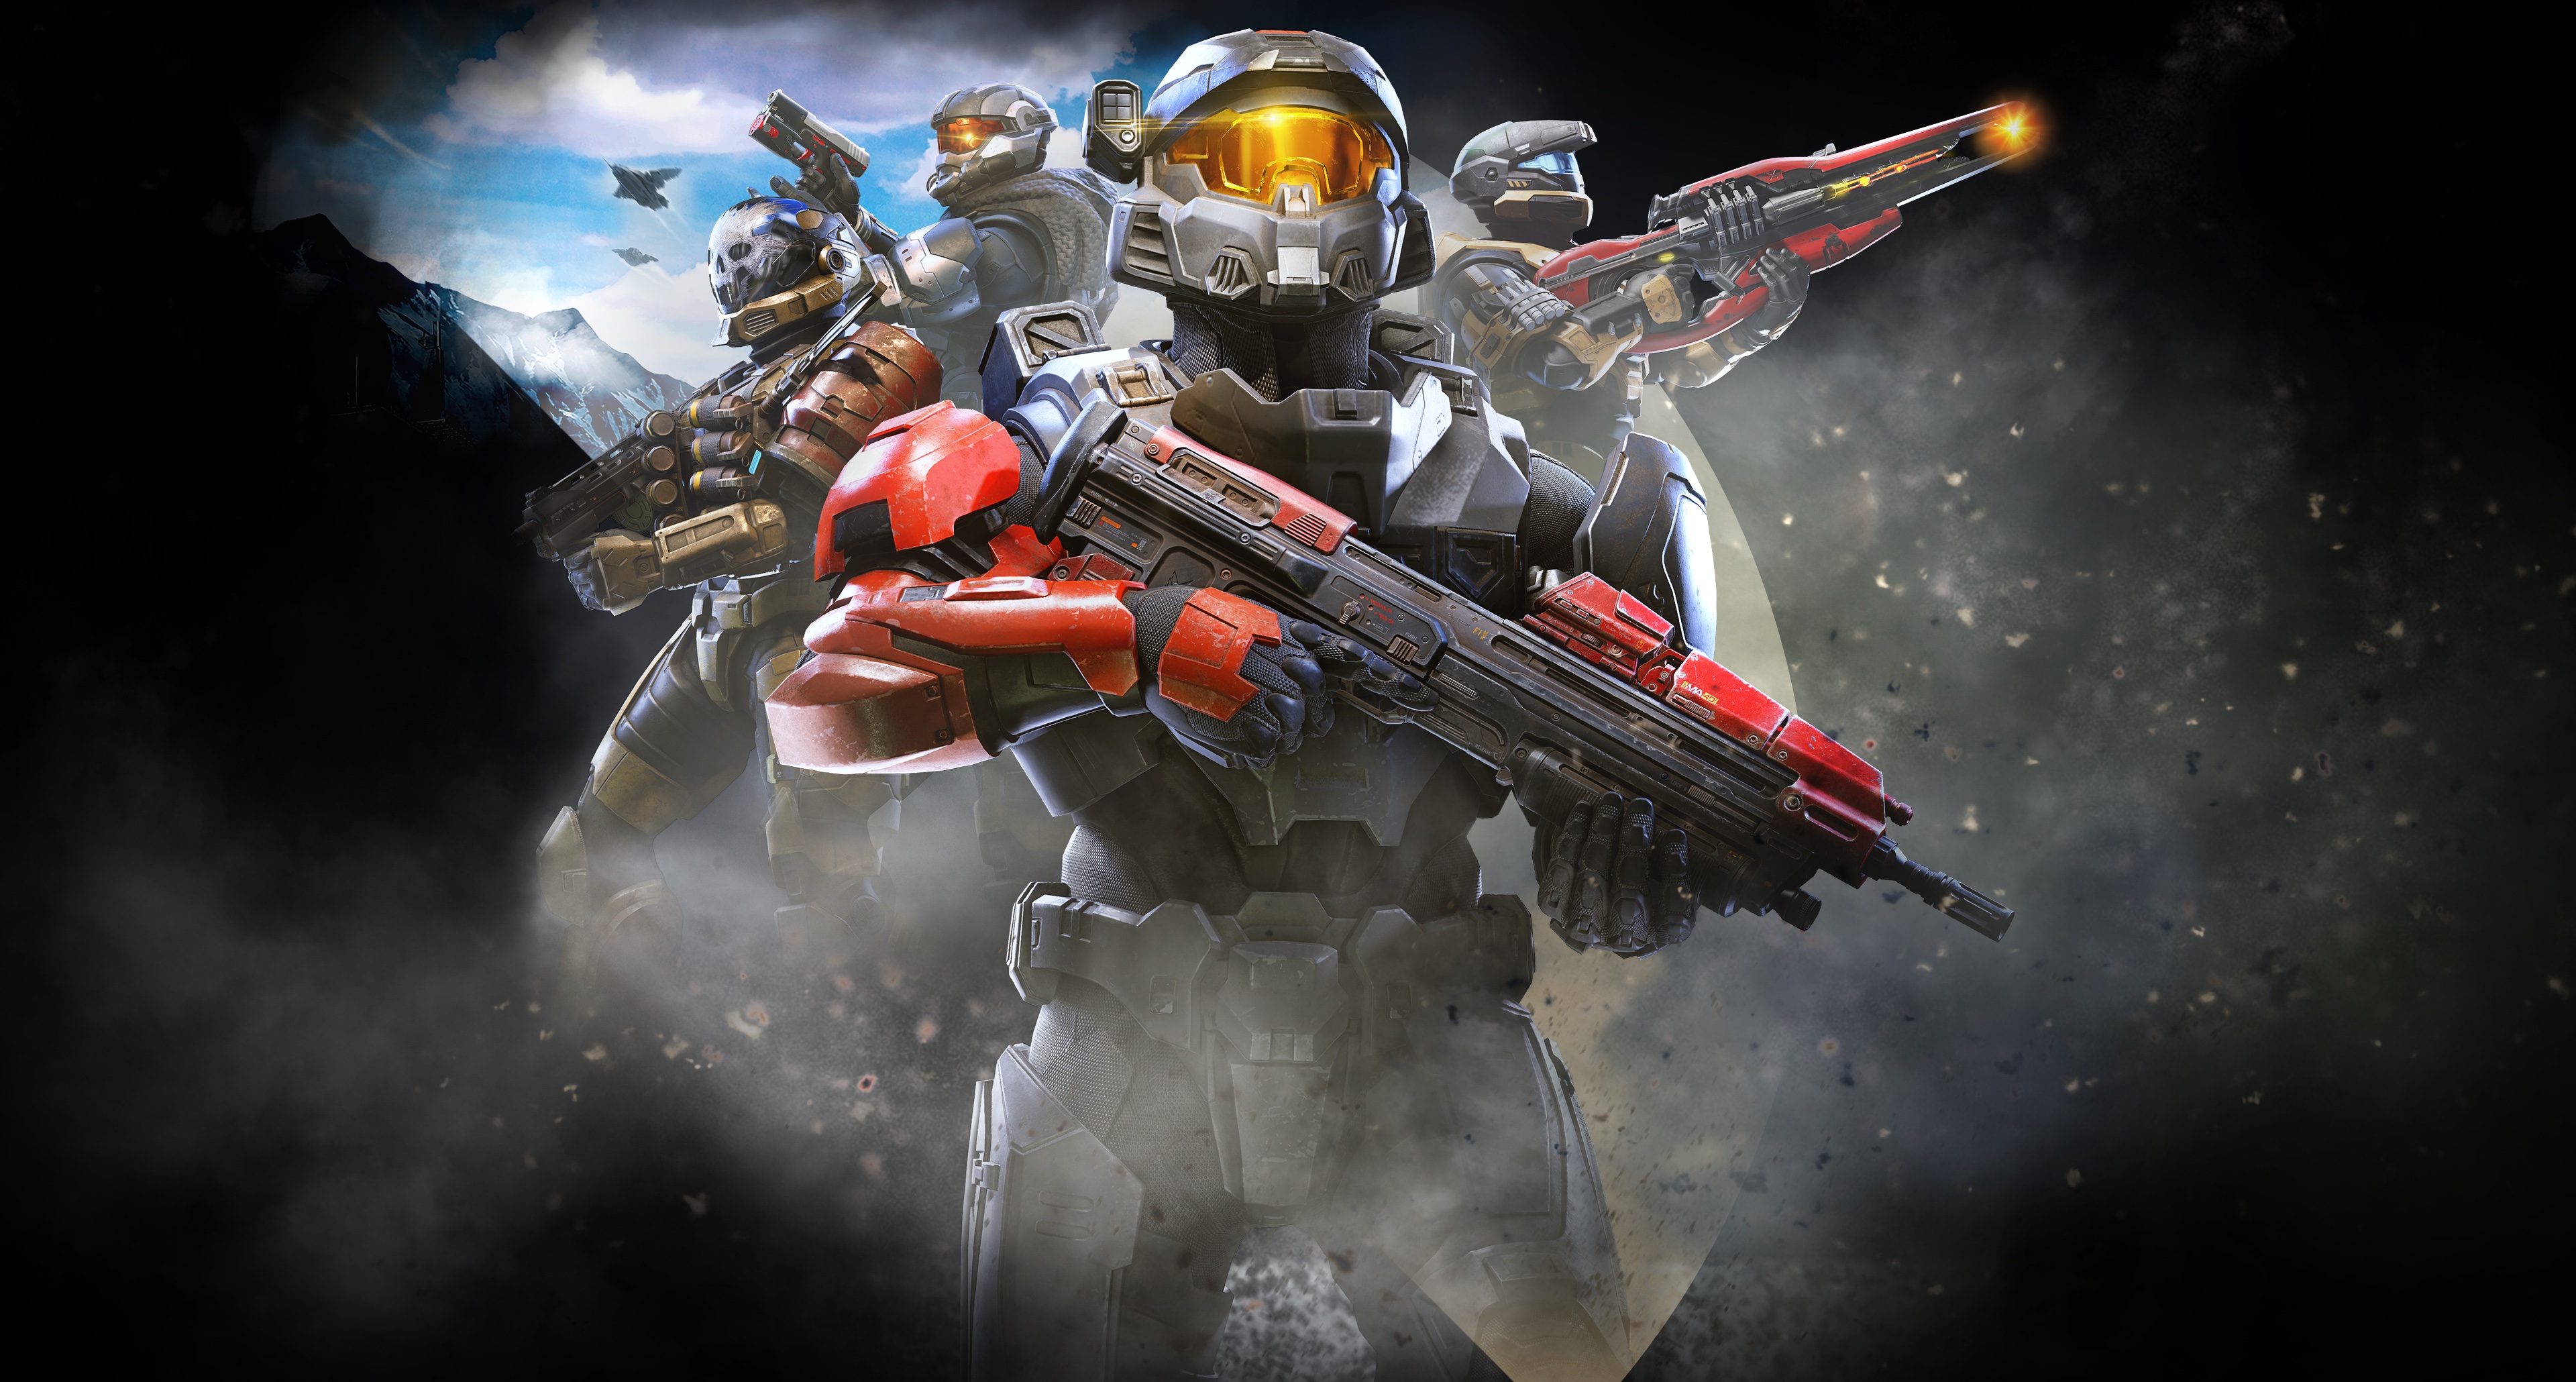 Microsoft's new Xbox launches in Nov., Halo Infinite delayed to 2021